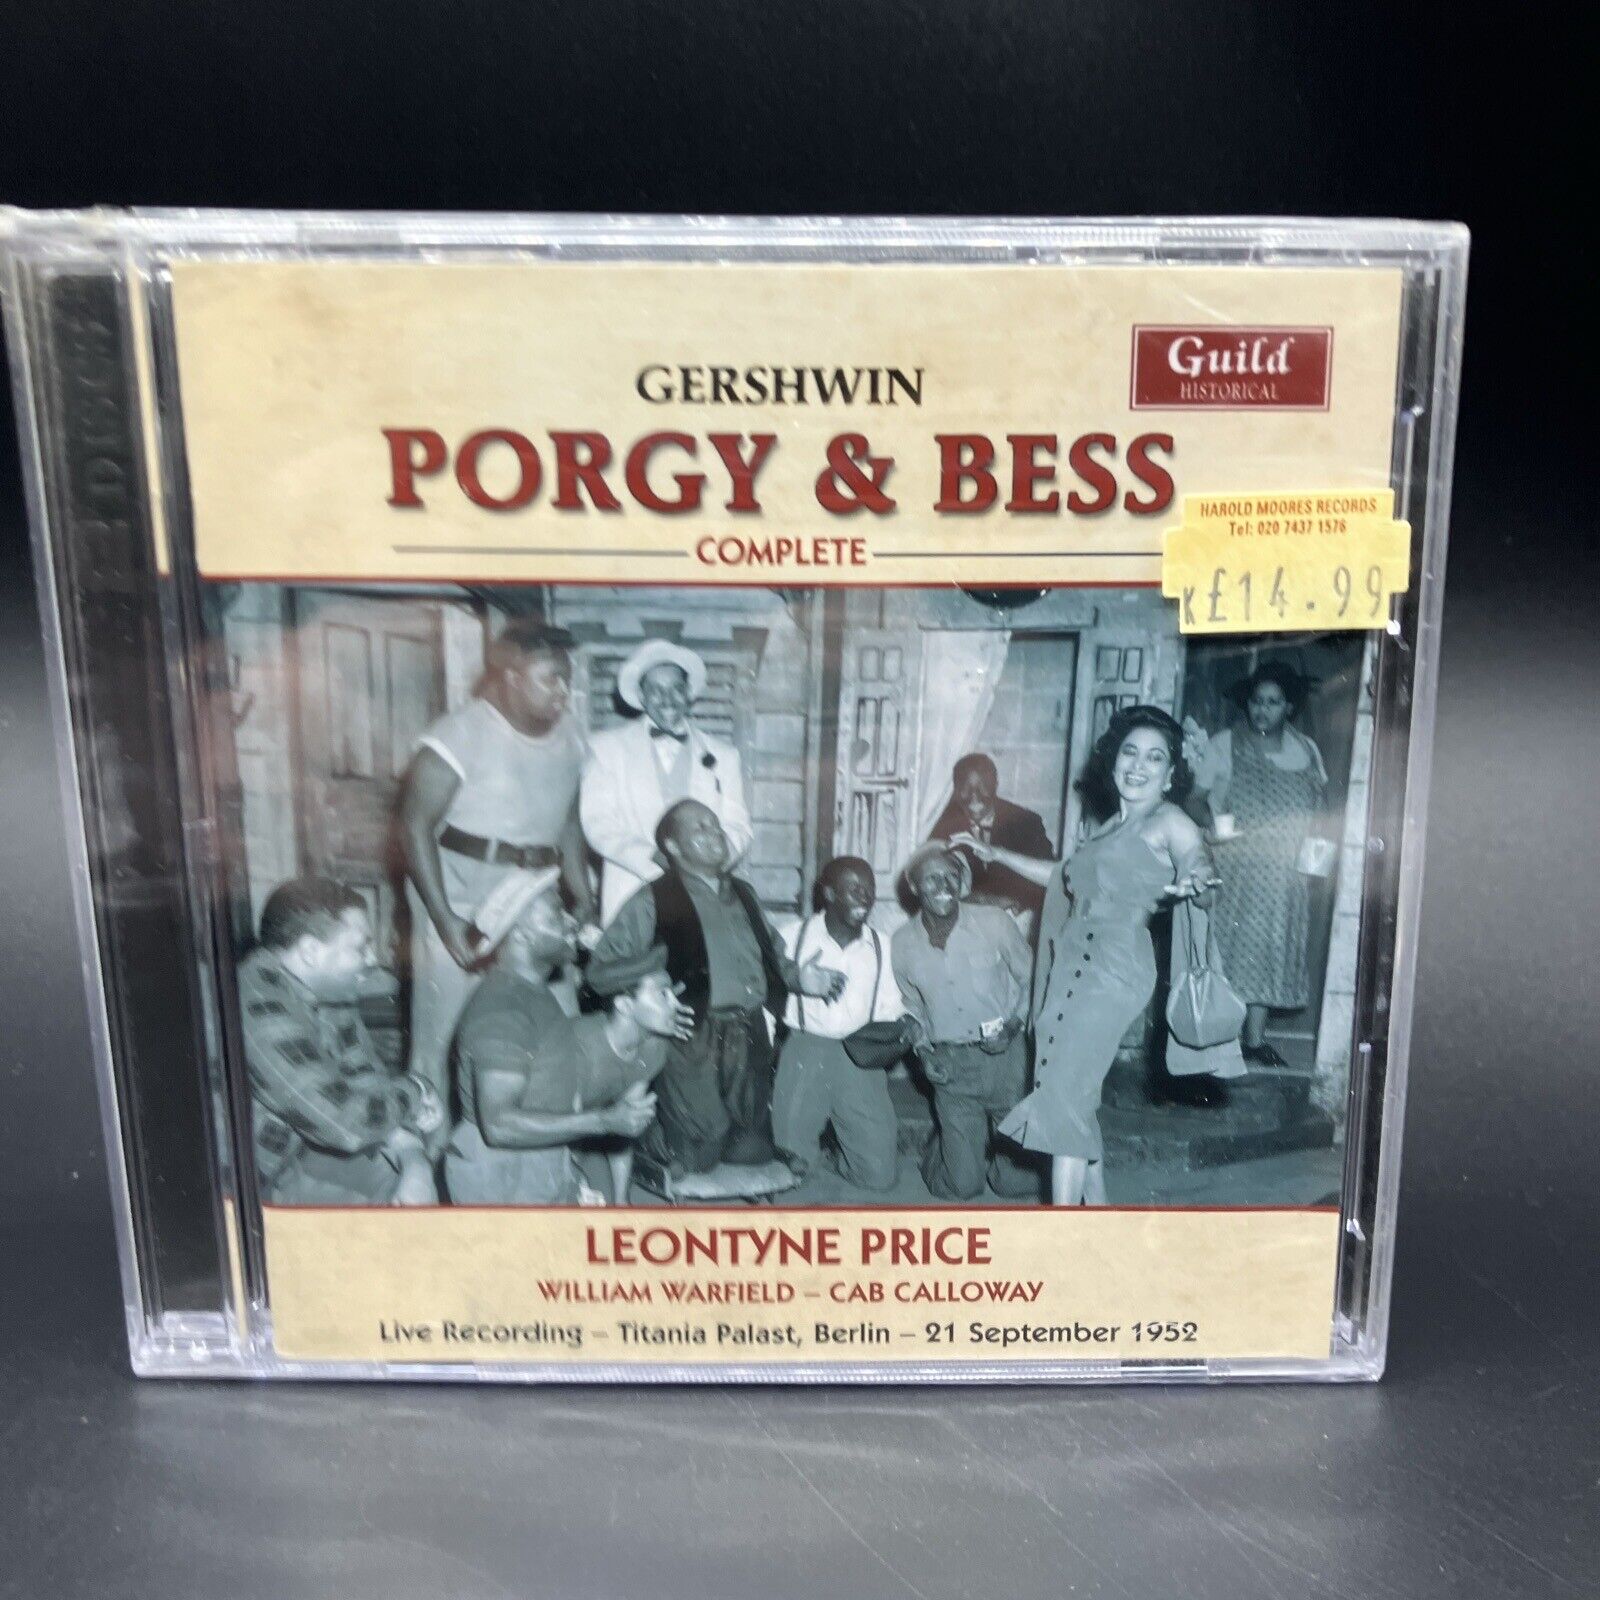 George Gershwin - Porgy & Bess (Complete) - CD - 2008 Guild Sealed w Case Defect